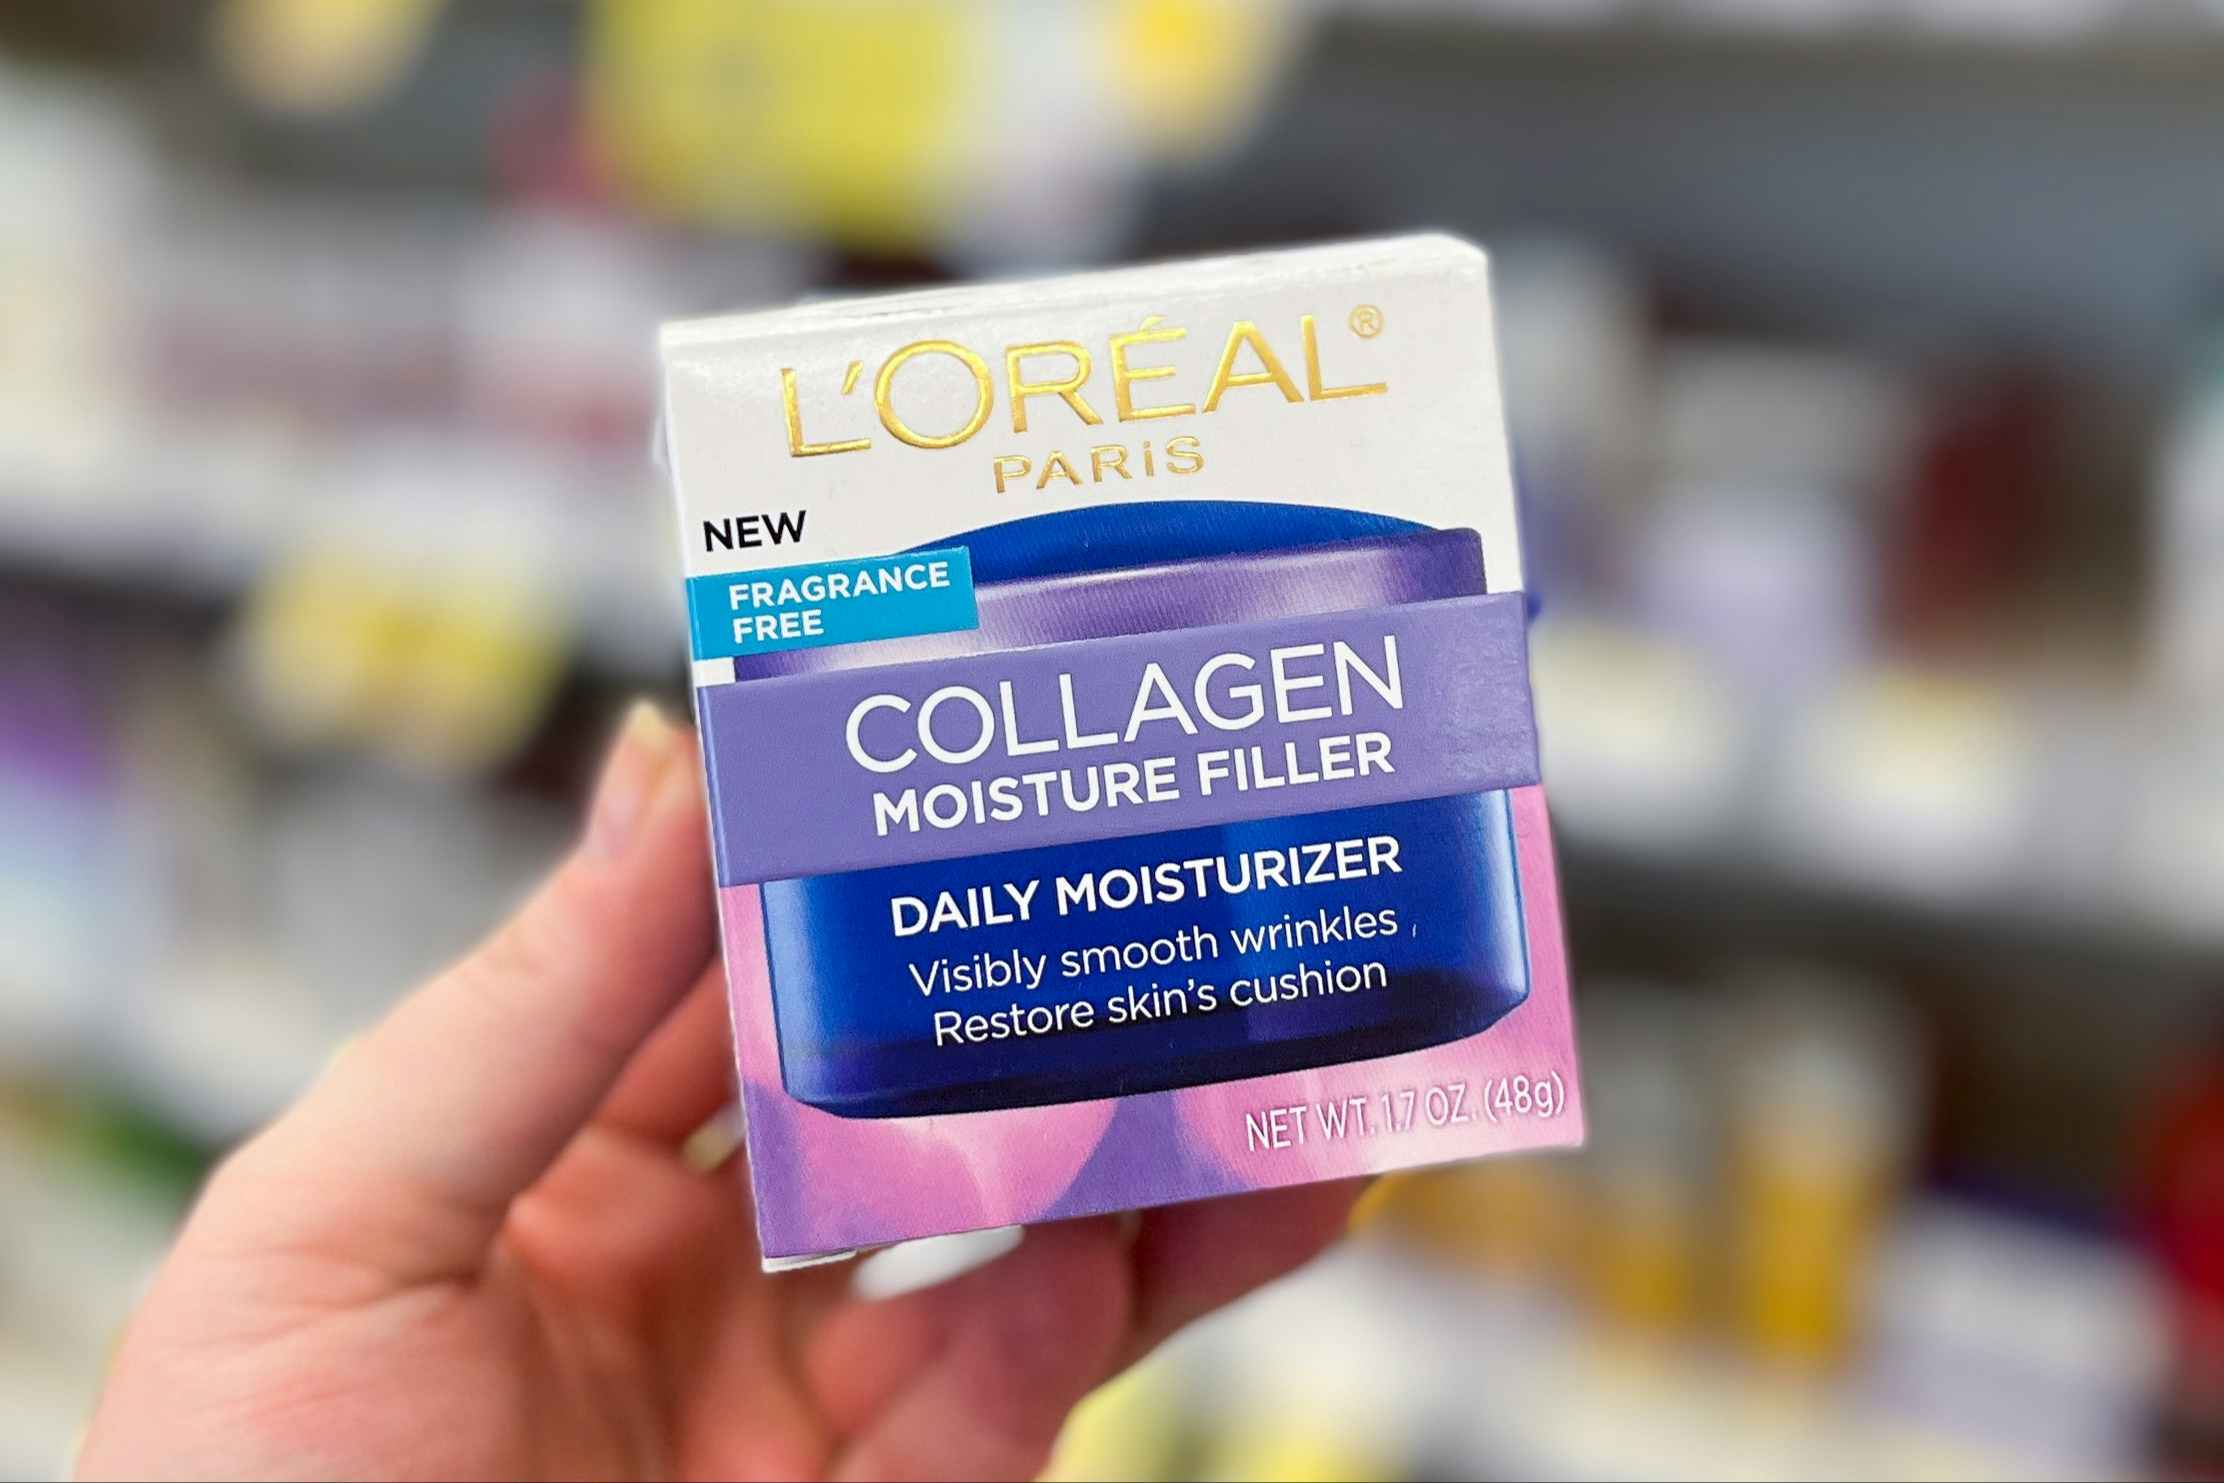 L'Oreal Paris Collagen Moisturizer, as Low as $2.78 on Amazon (Reg. $11.49)